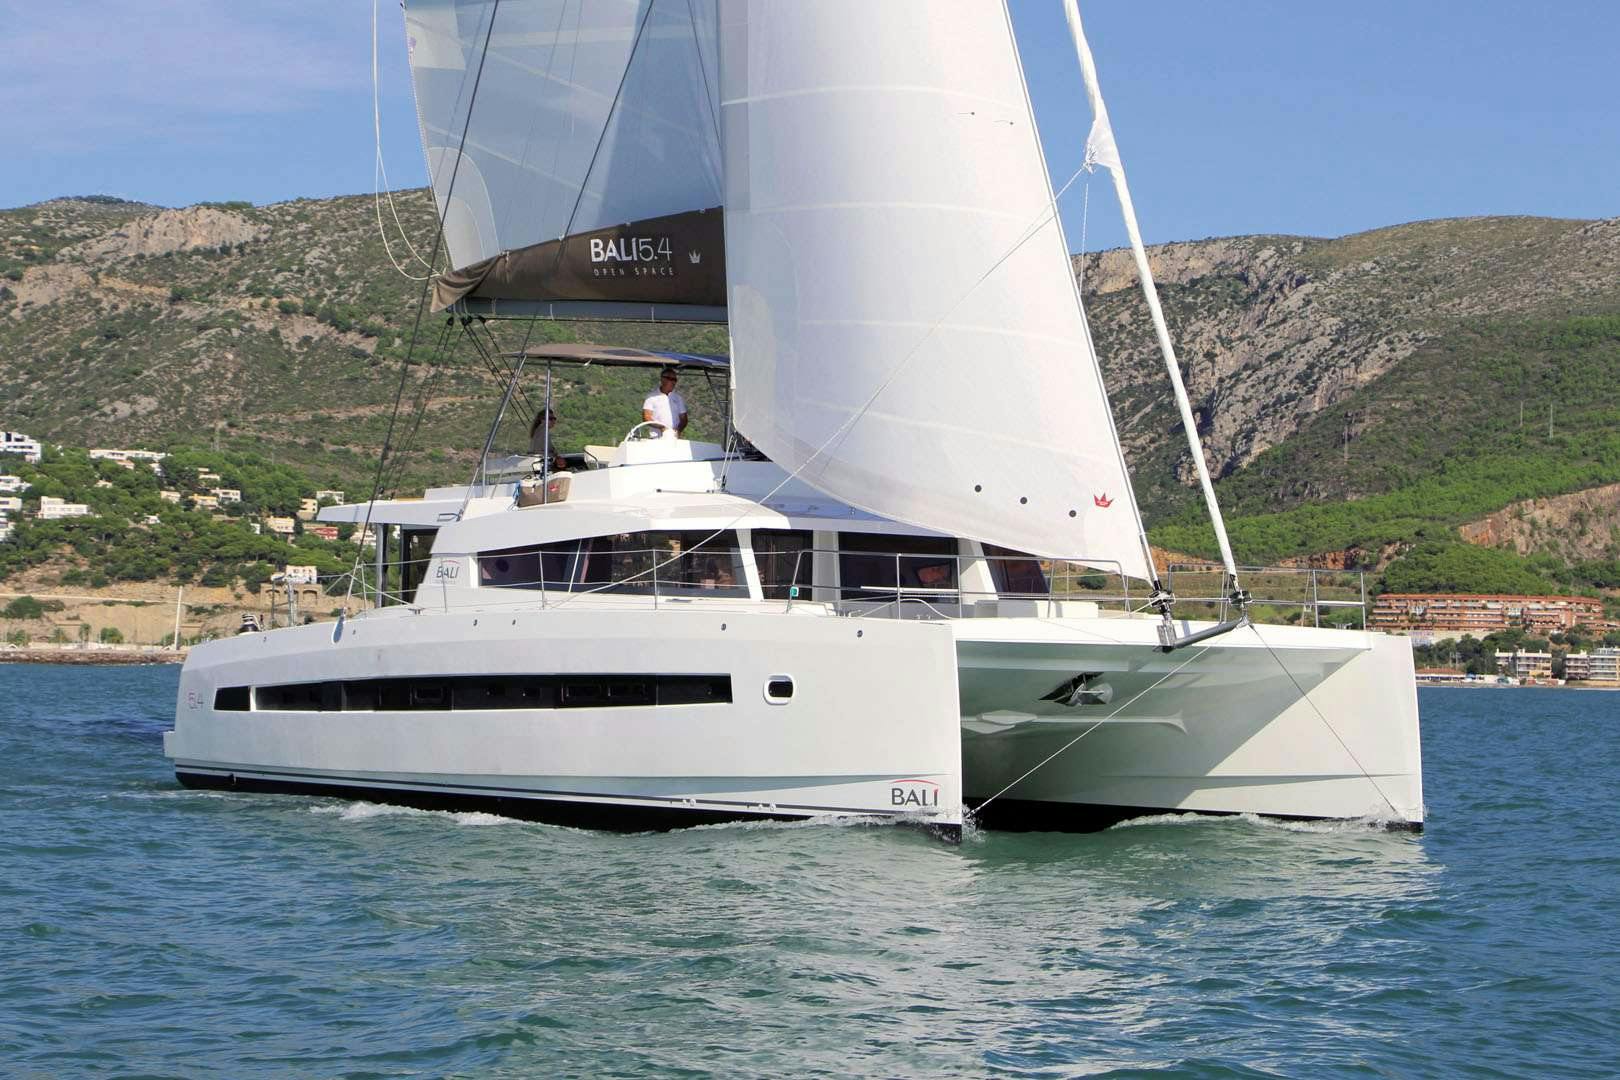 TWO OCEANS - Yacht Charter Mallorca & Boat hire in W. Med - Spain/Balearics, Caribbean Leewards, Caribbean Windwards, Caribbean Virgin Islands (BVI) 1